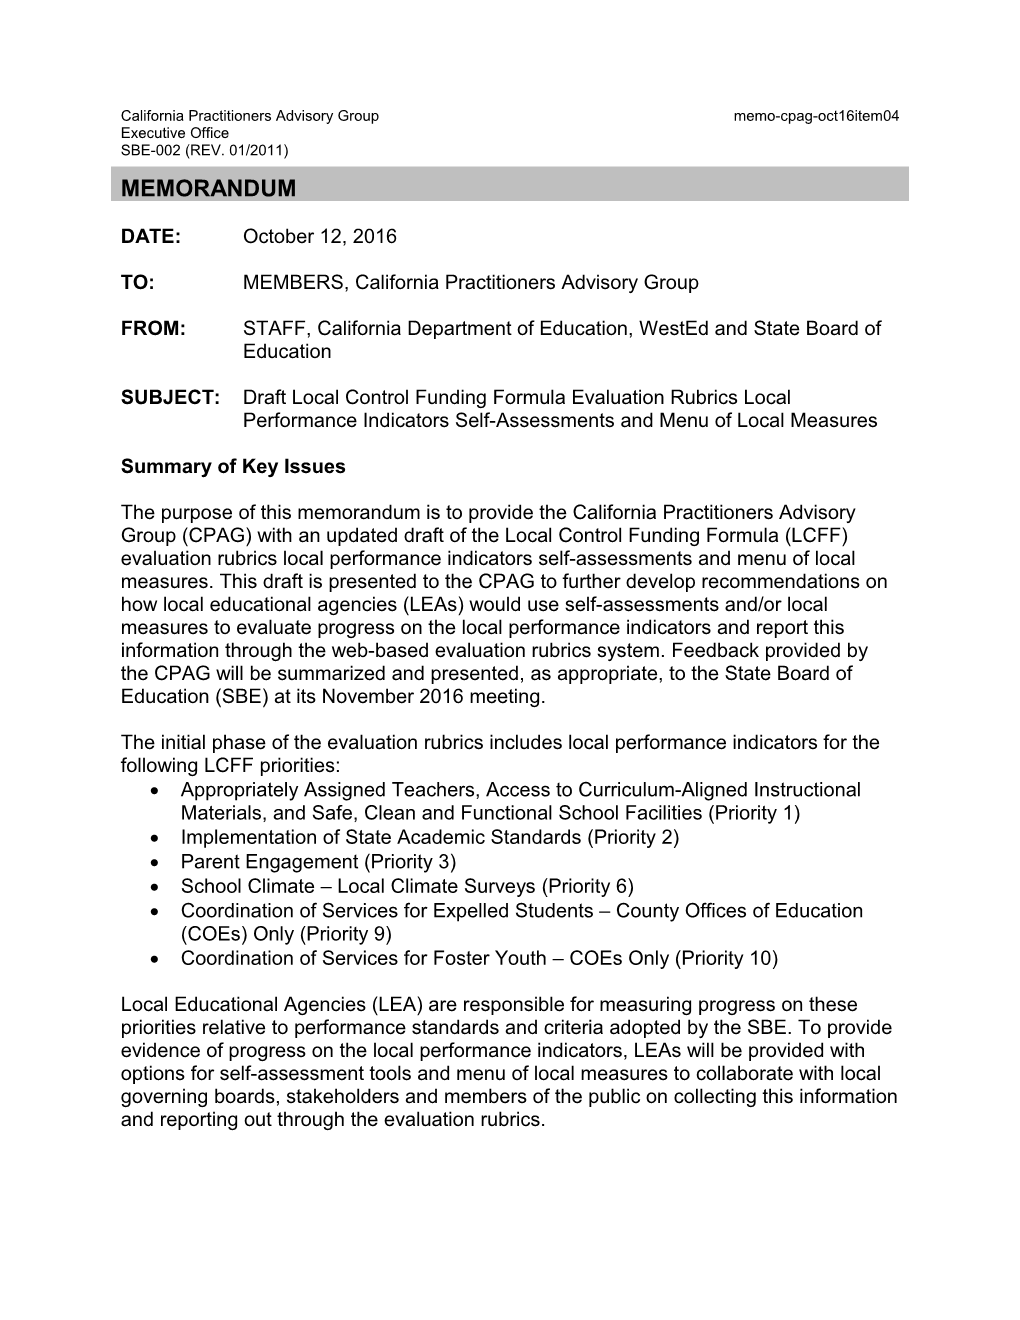 October 2016 Memorandum CPAG Item 04 - California Practitioners Advisory Group (CA State